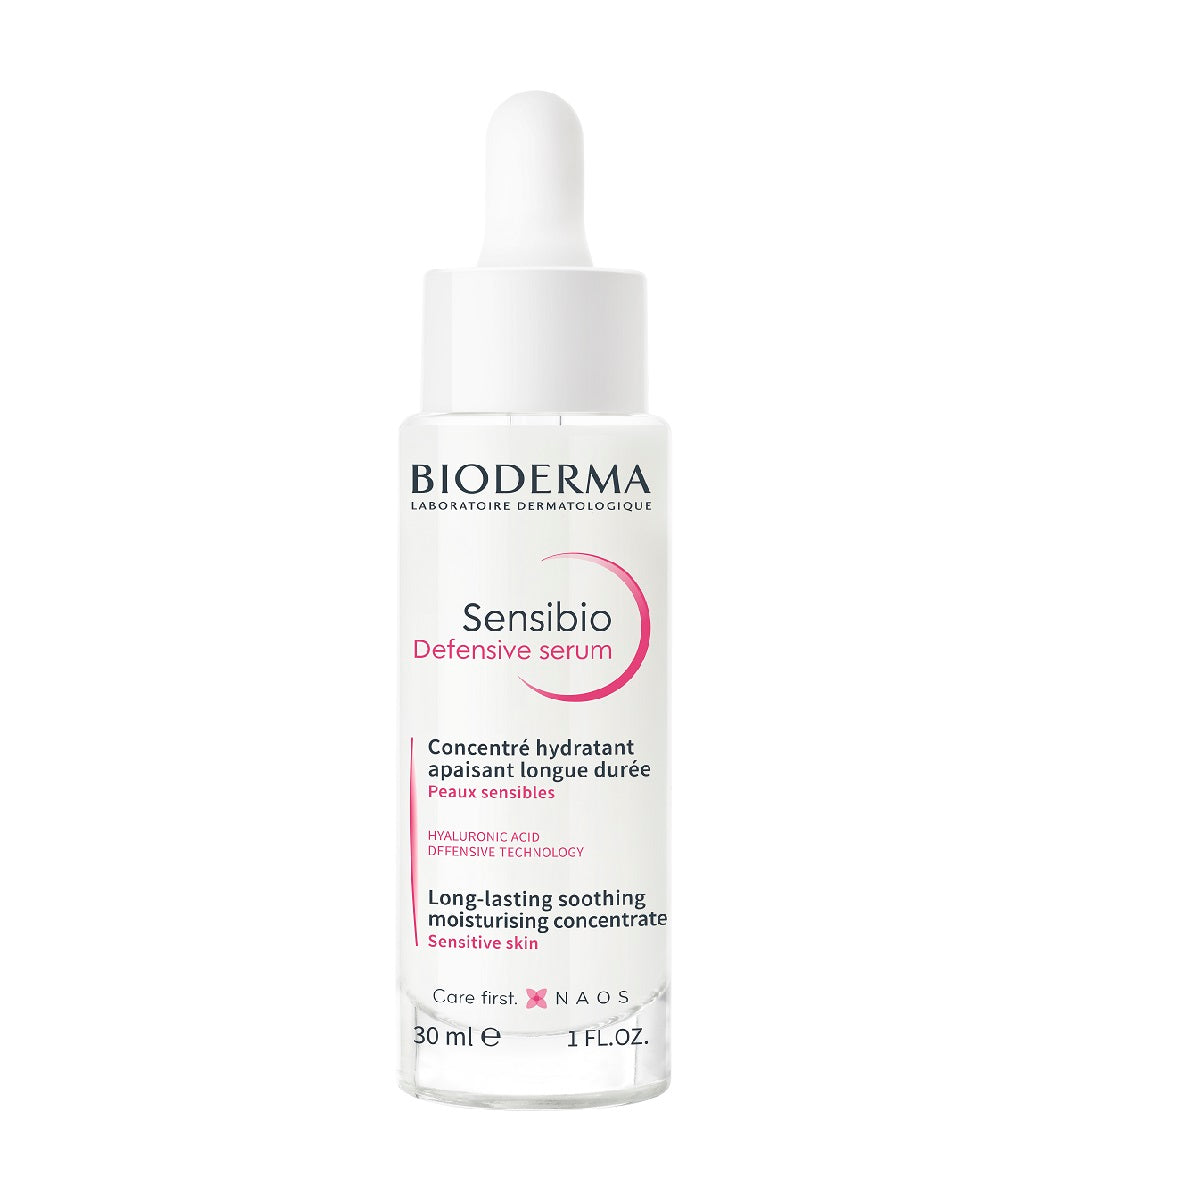 Buy  Bioderma Sensibio Defensive Serum - 30ml | Your Partner for Glowing Glass Skin - at Best Price Online in Pakistan